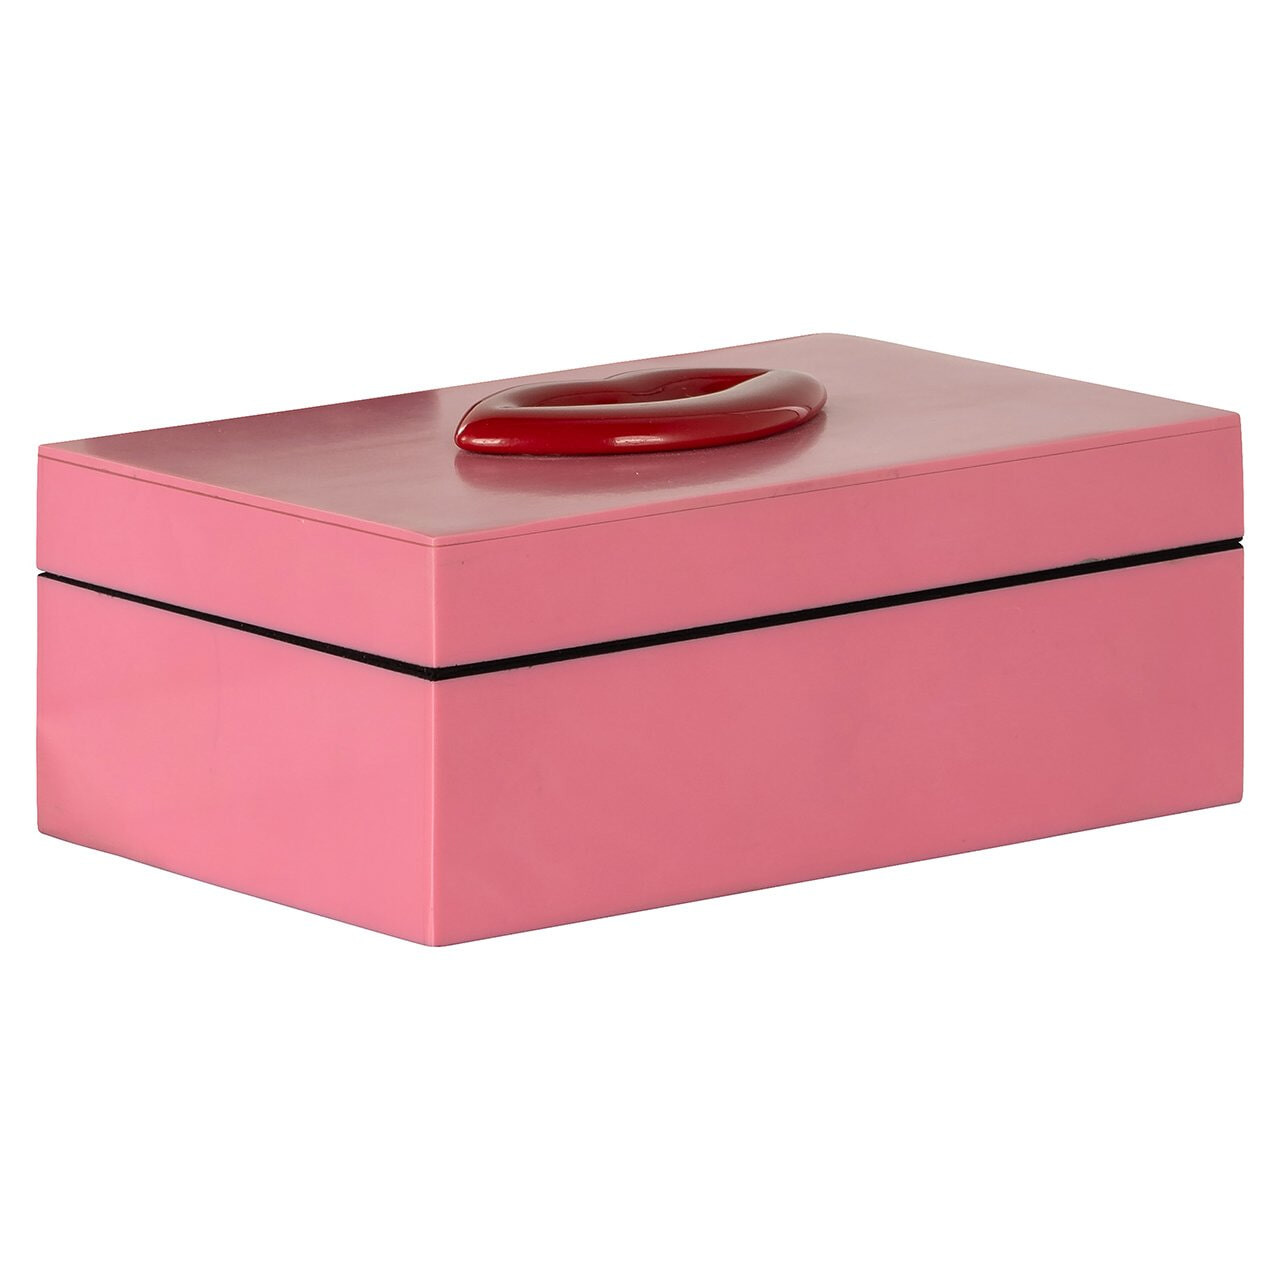 Richmond Juwelenbox Charis - Roze